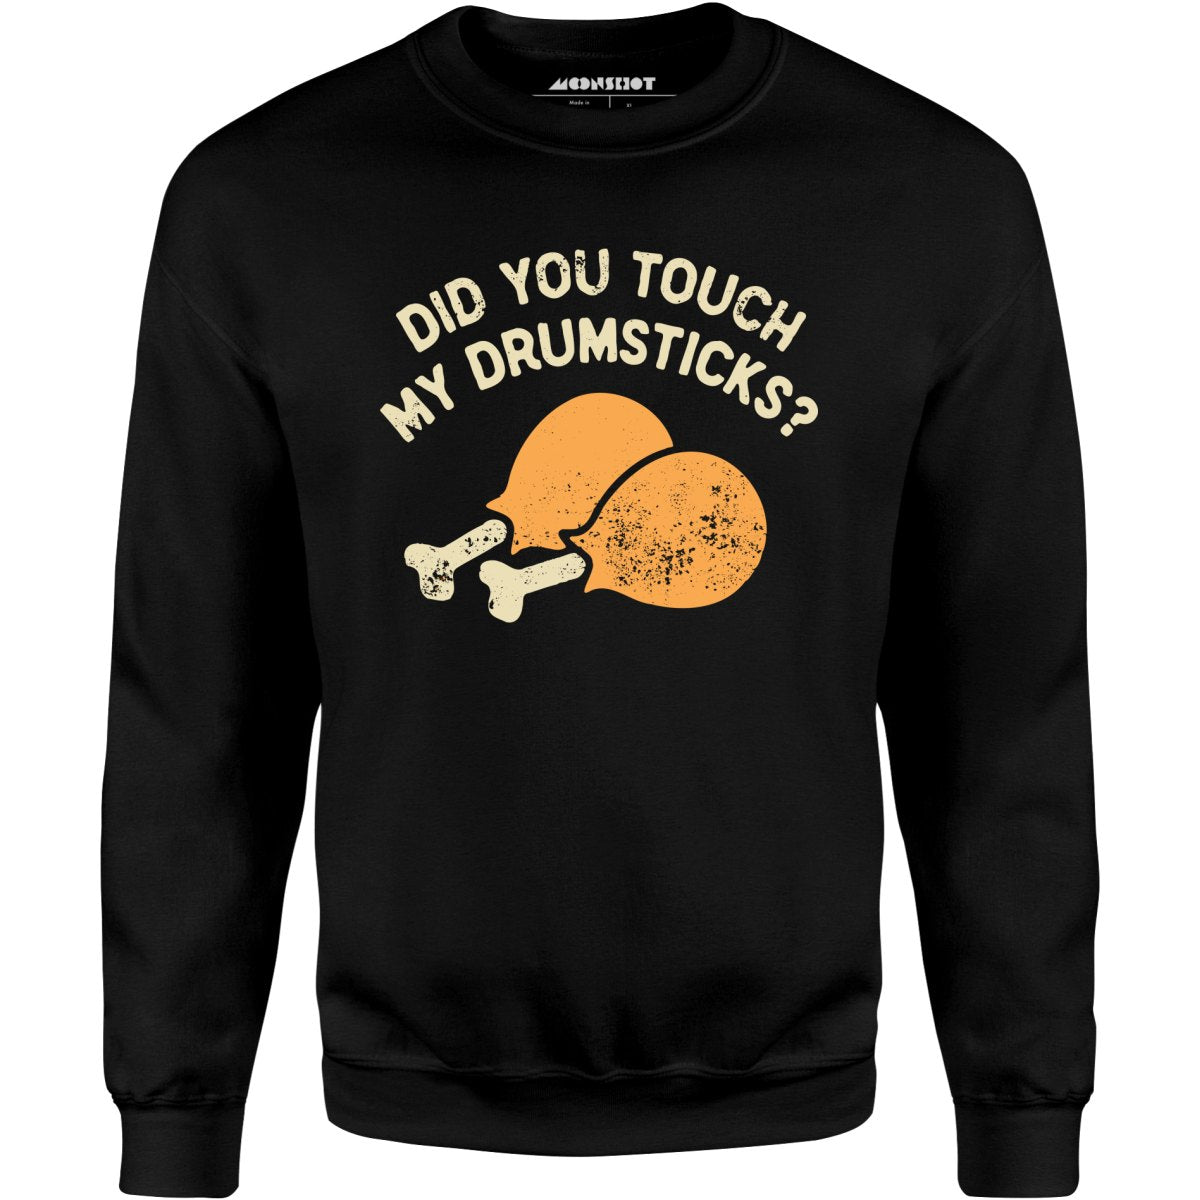 Did You Touch My Drumsticks? - Unisex Sweatshirt